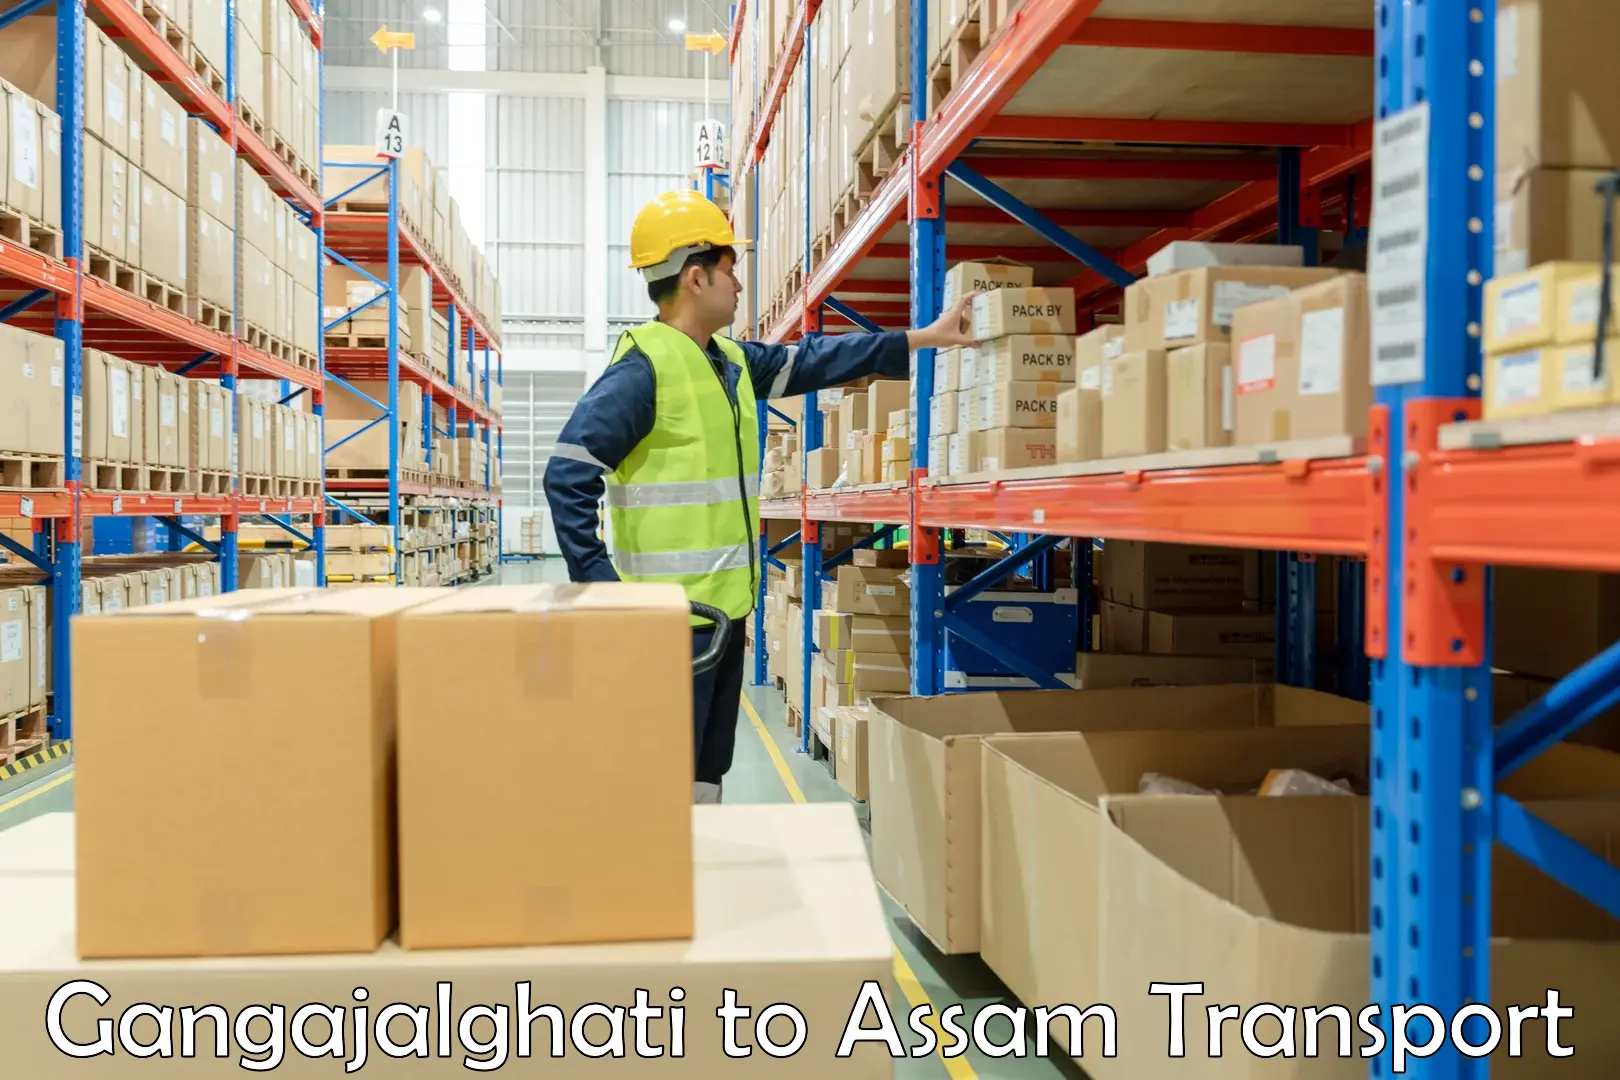 Transport in sharing Gangajalghati to Assam